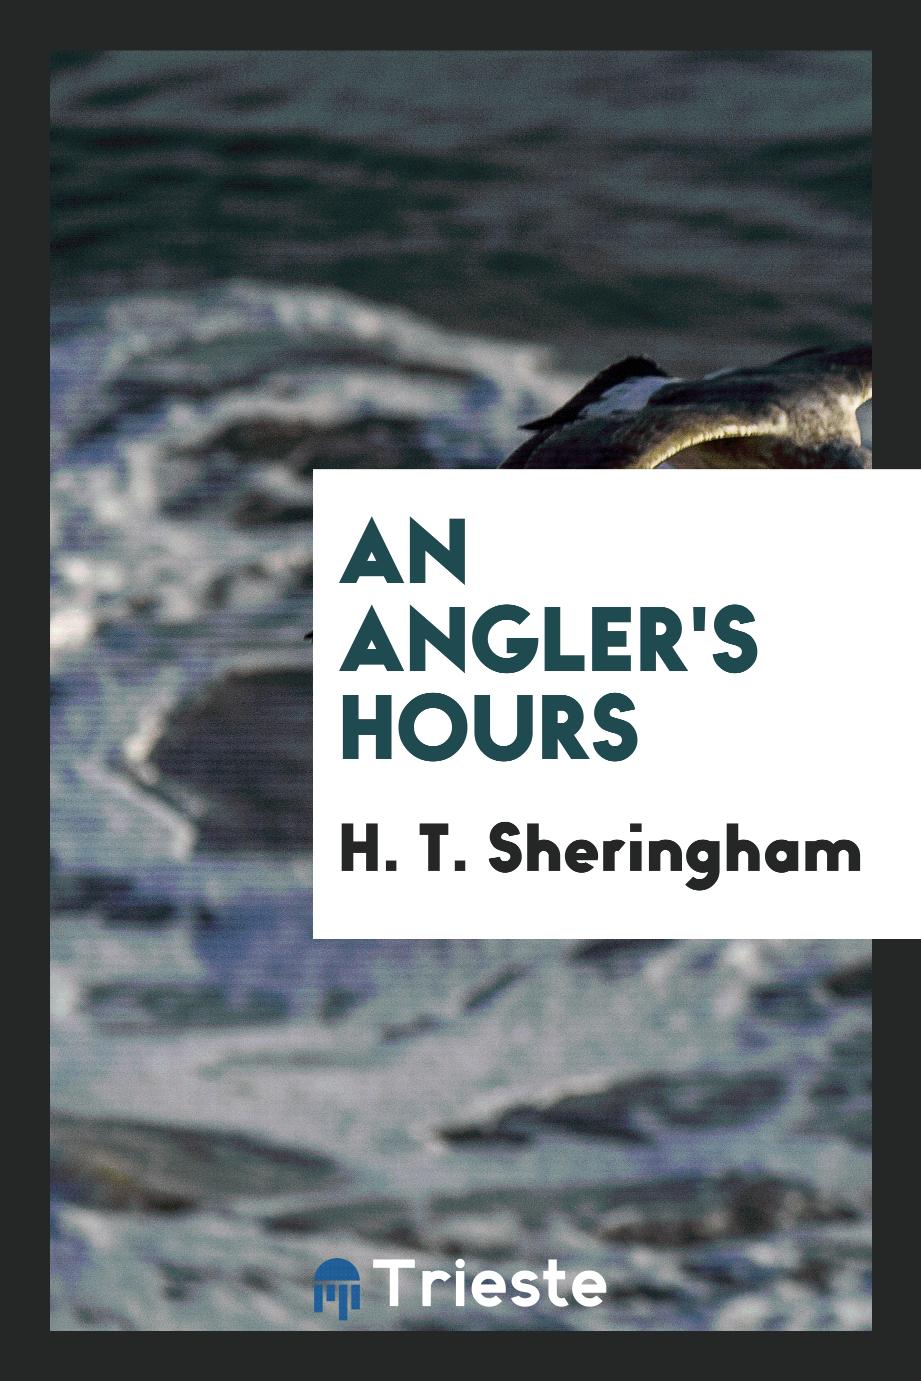 An angler's hours